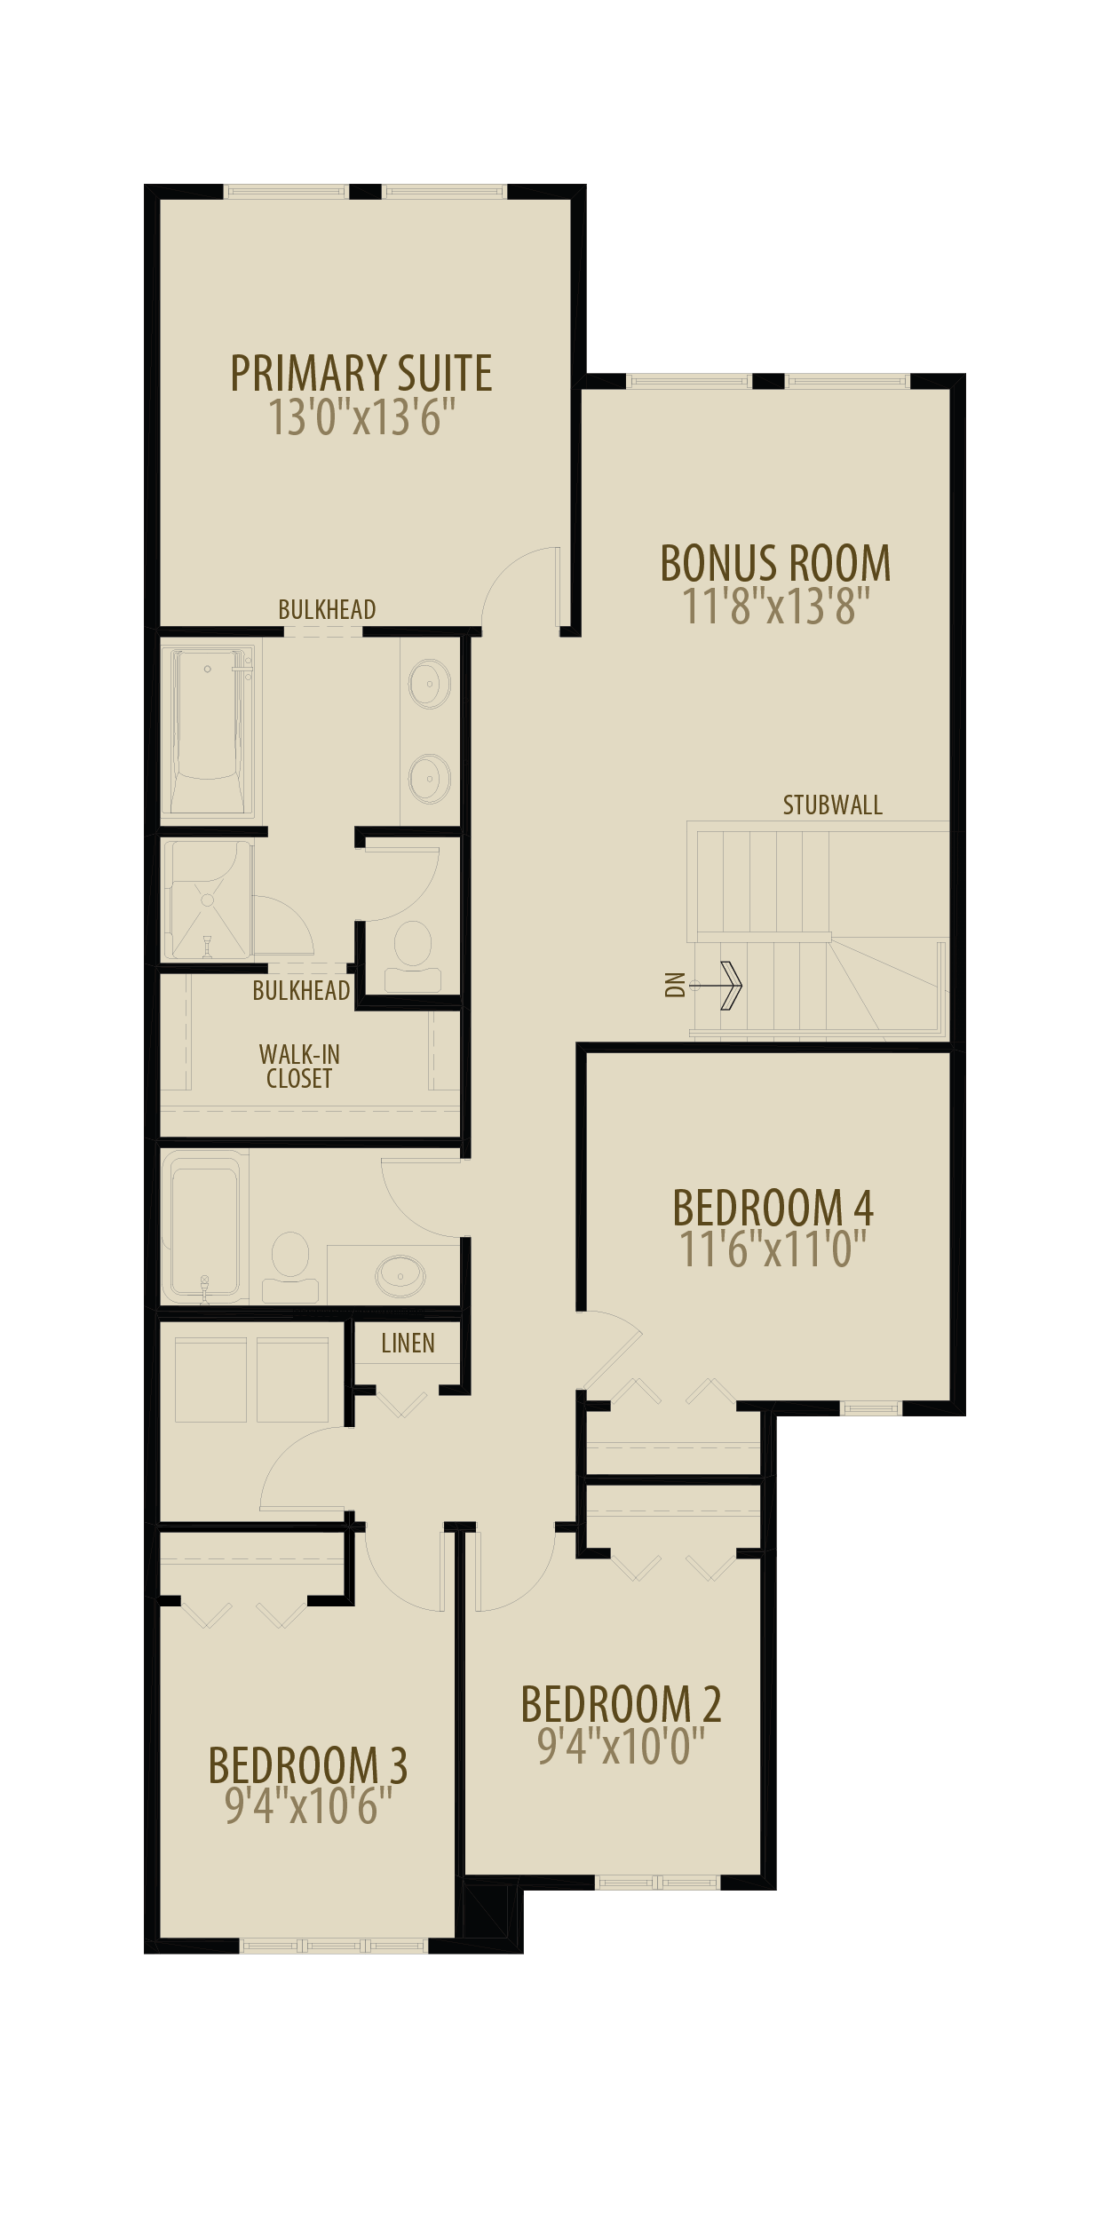 4th Bedroom Bonus Room adds 84 sq ft